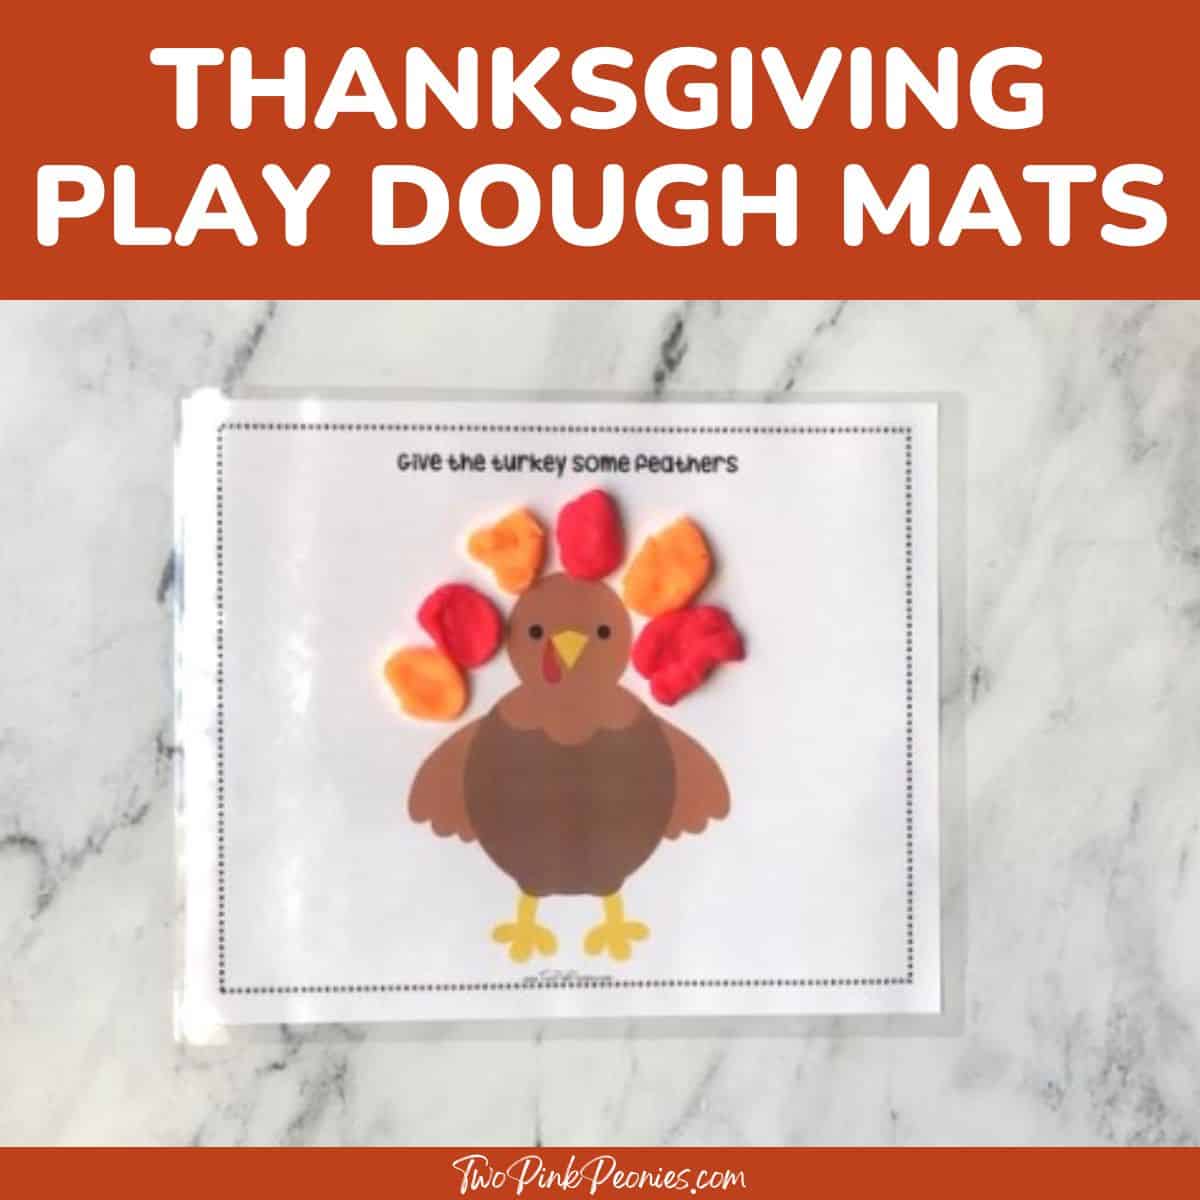 text that says Thanksgiving Play Dough Mats below is the turkey play dough mat